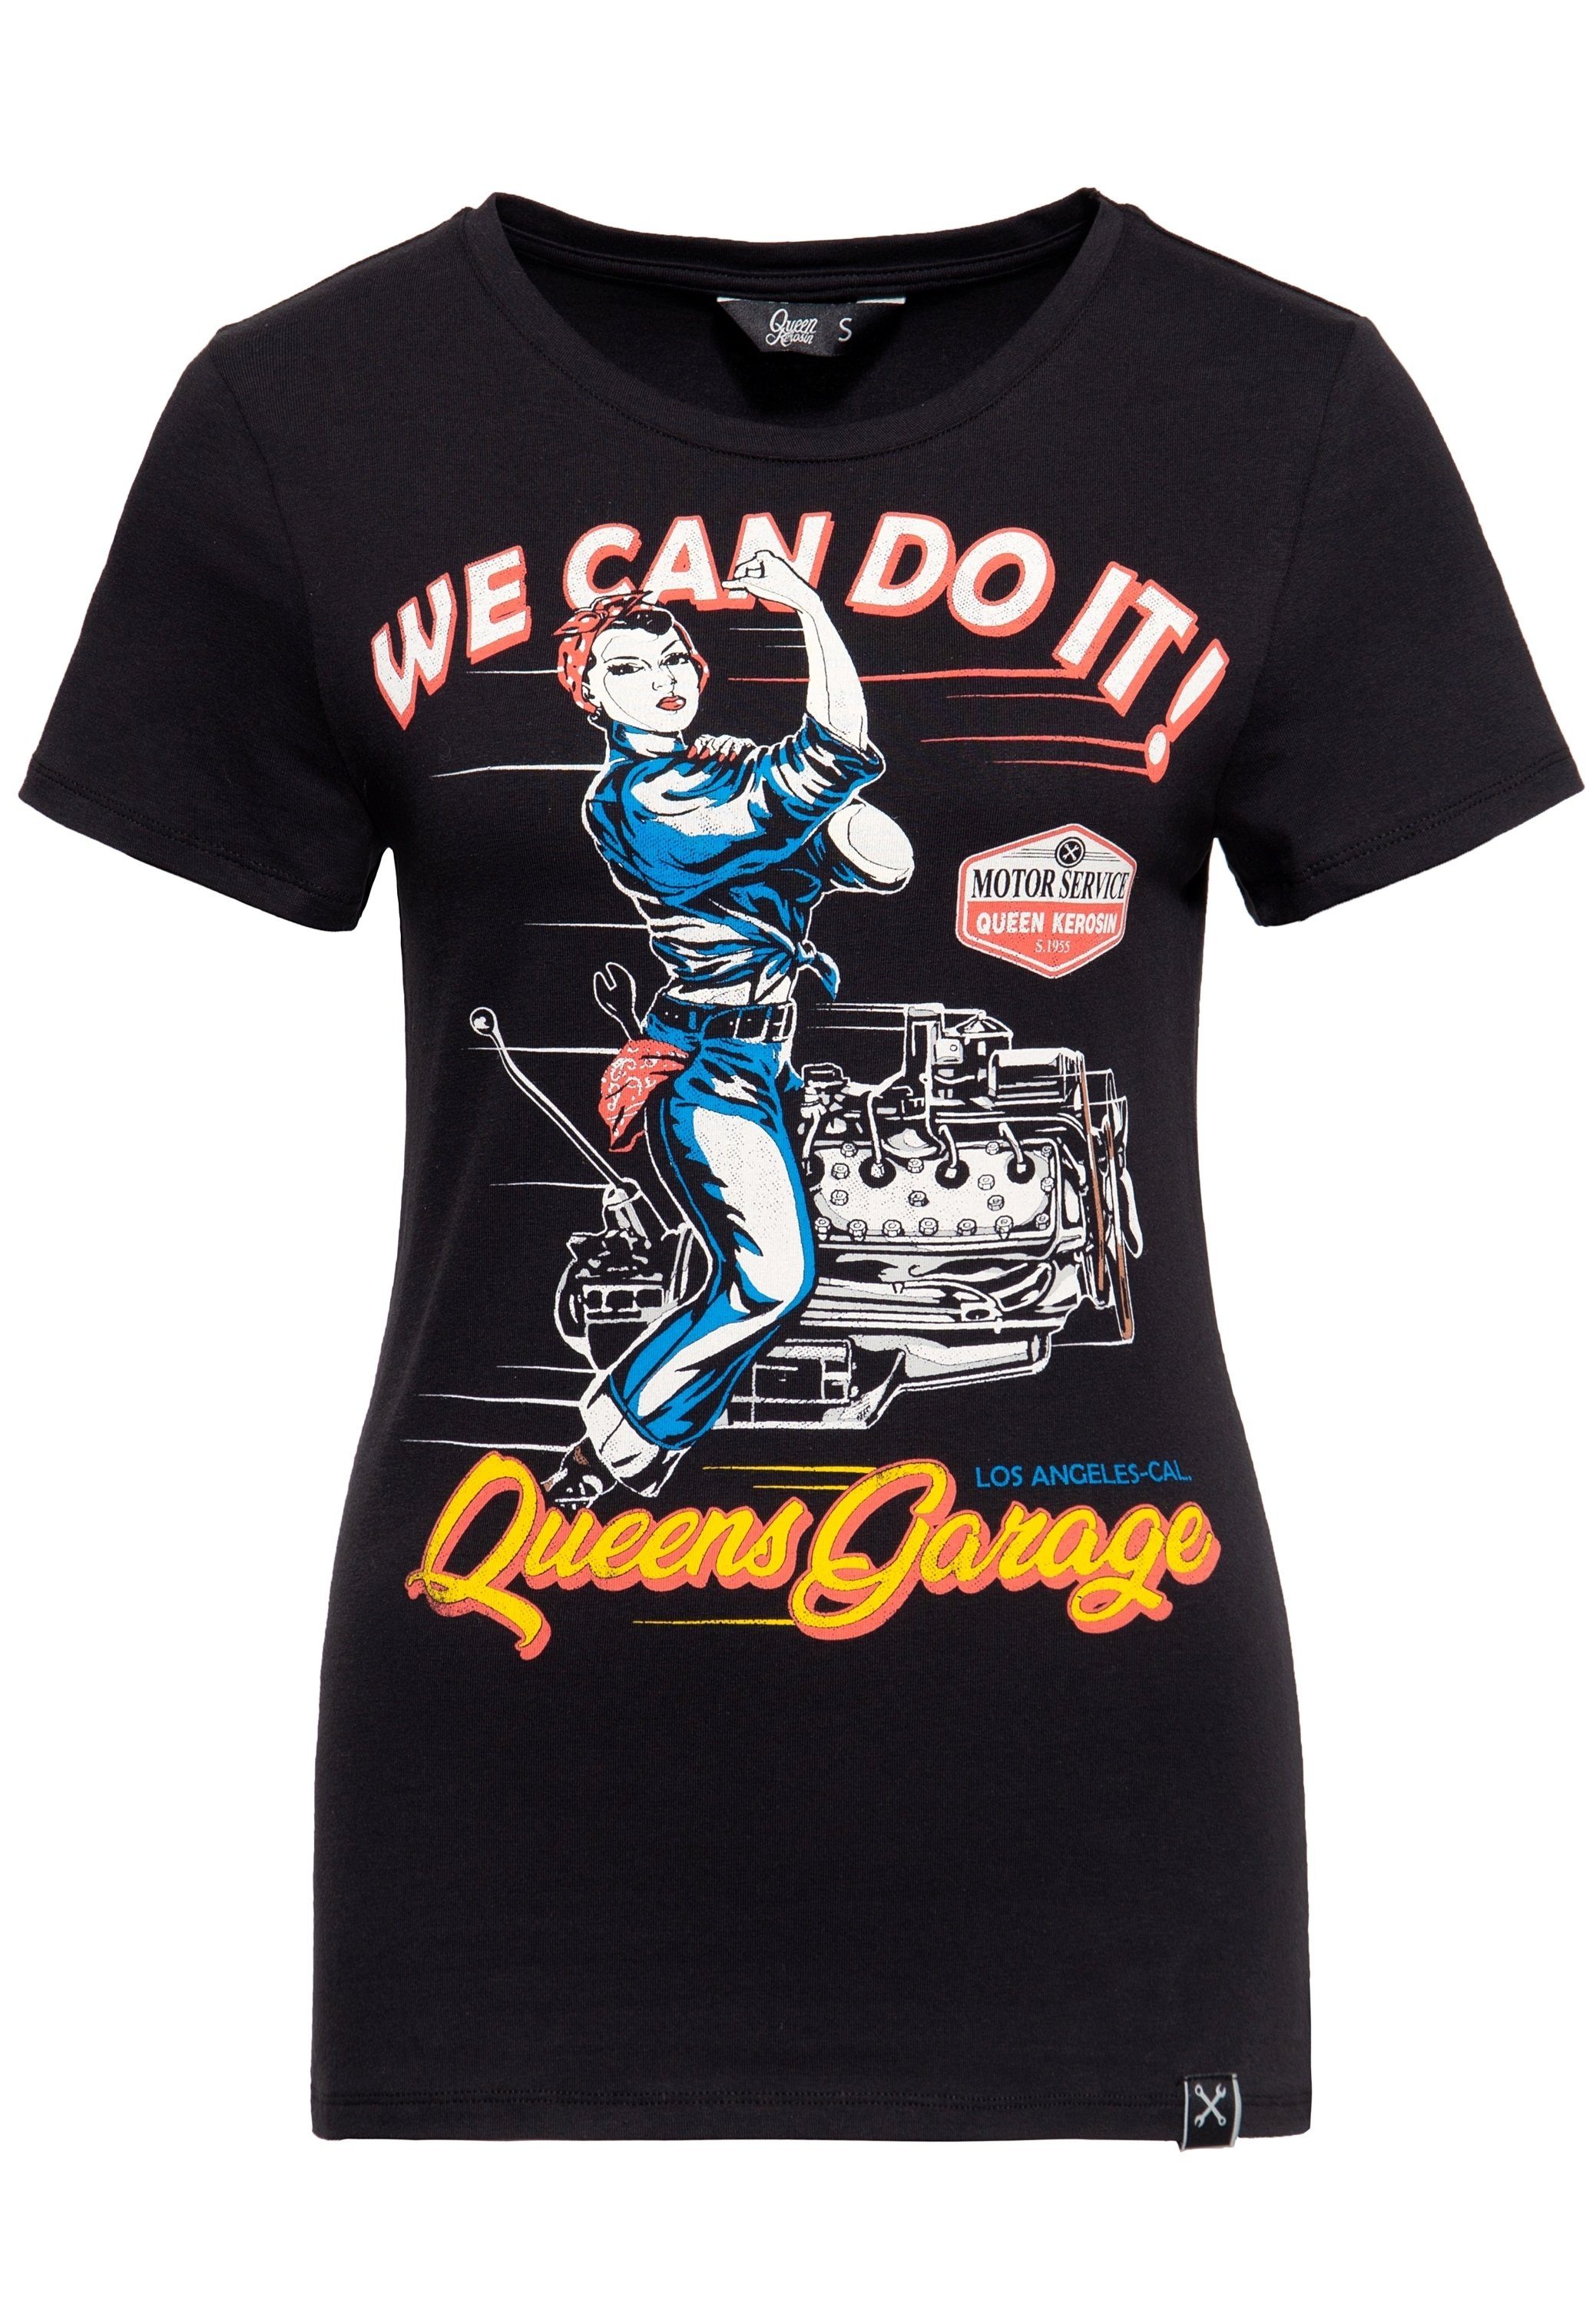 QueenKerosin T-Shirt We can do mit it! Vintage-Motiv